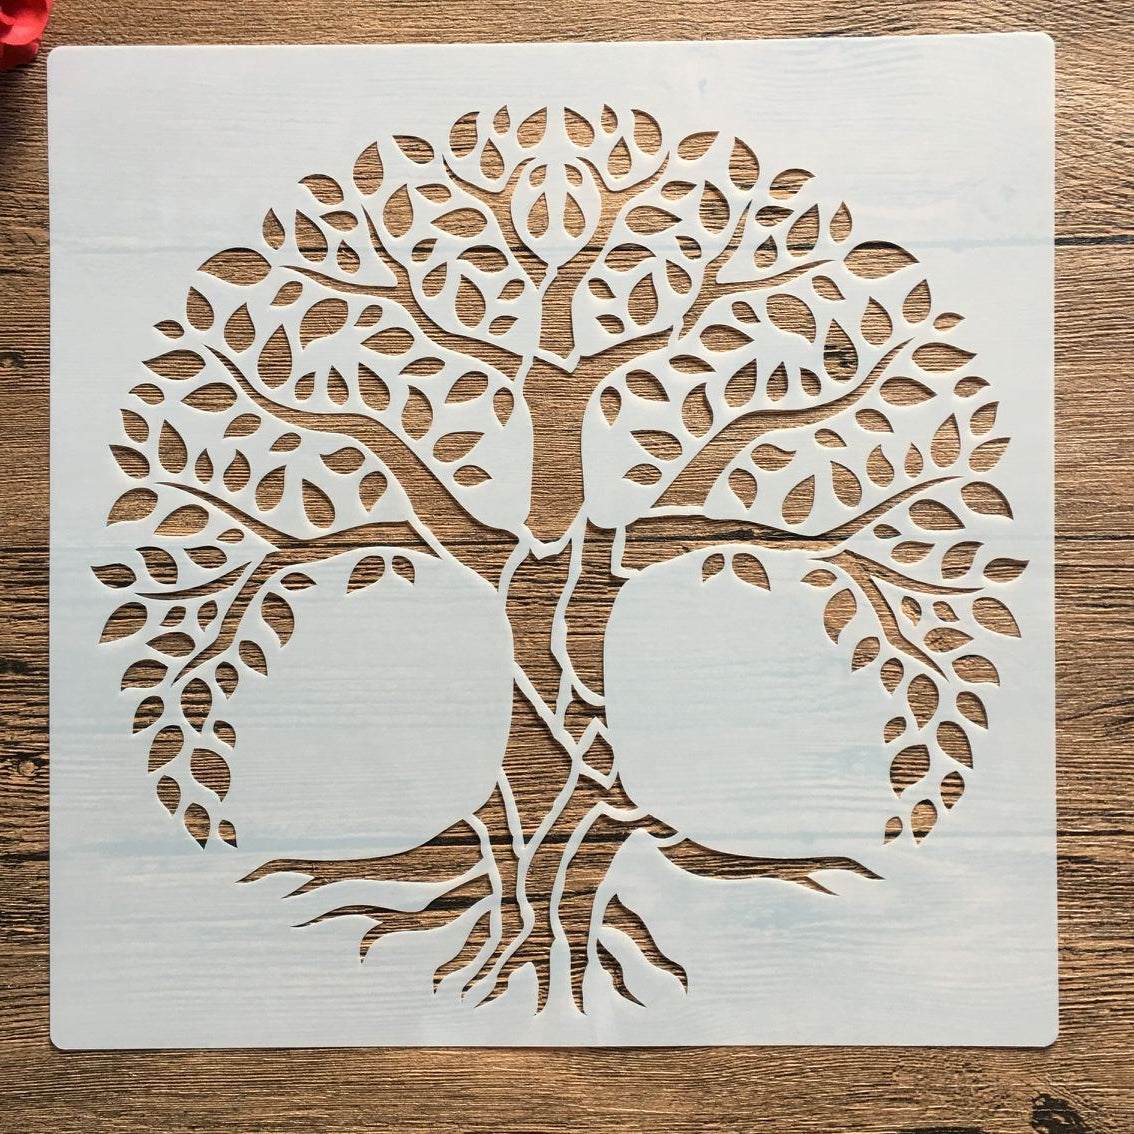 Spring Tree 30*30cm DIY Craft Layering Stencils